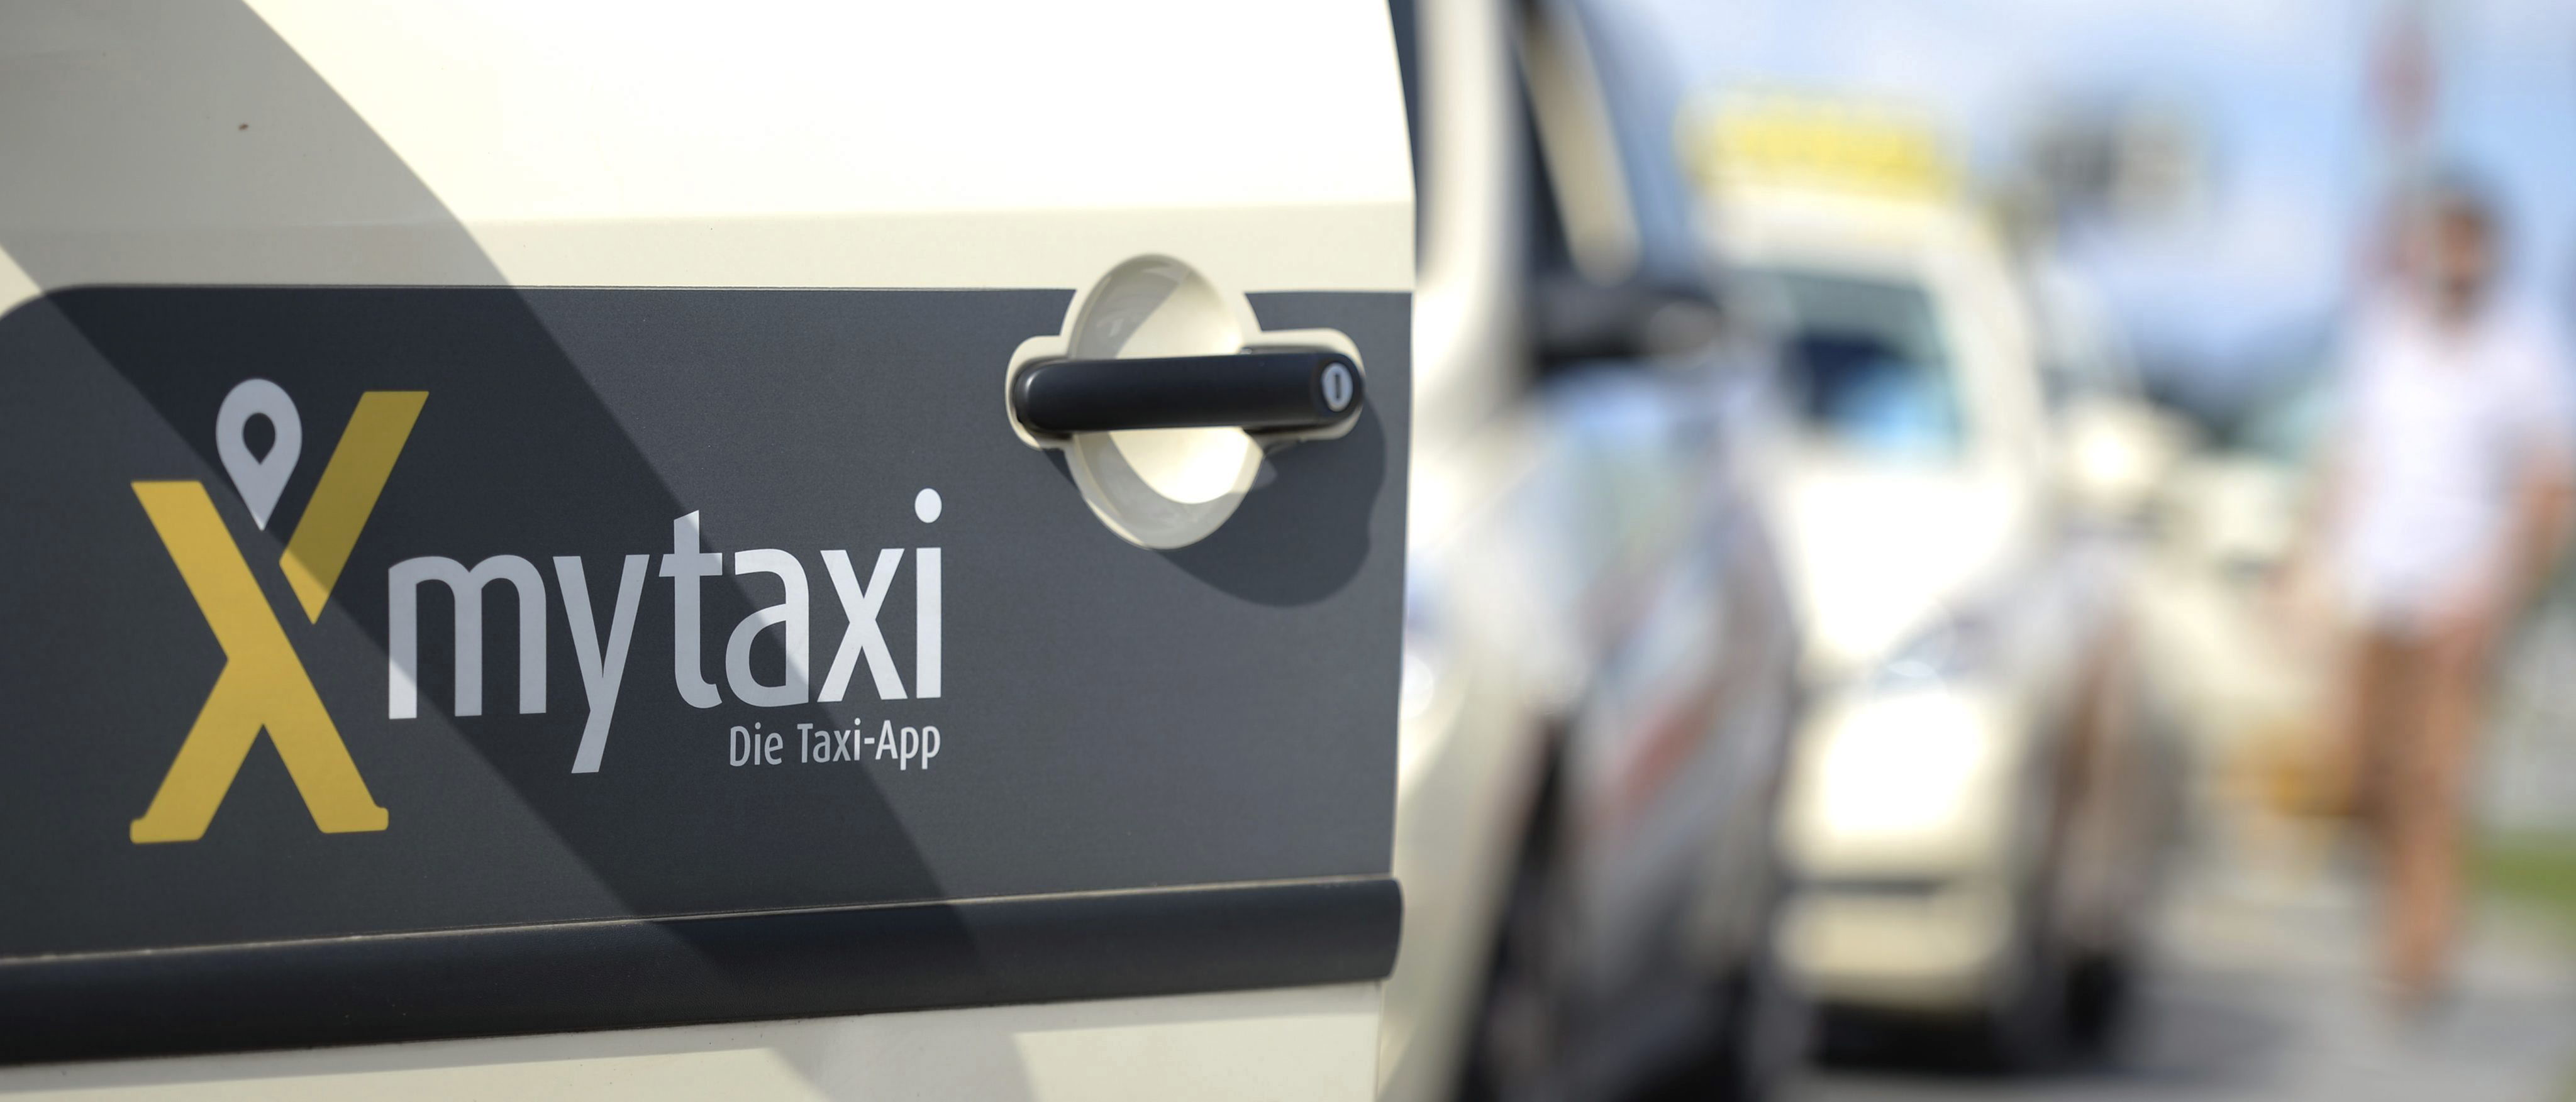 myTaxi se fusiona con Hailo para crear la mayor plataforma de taxis de Europa